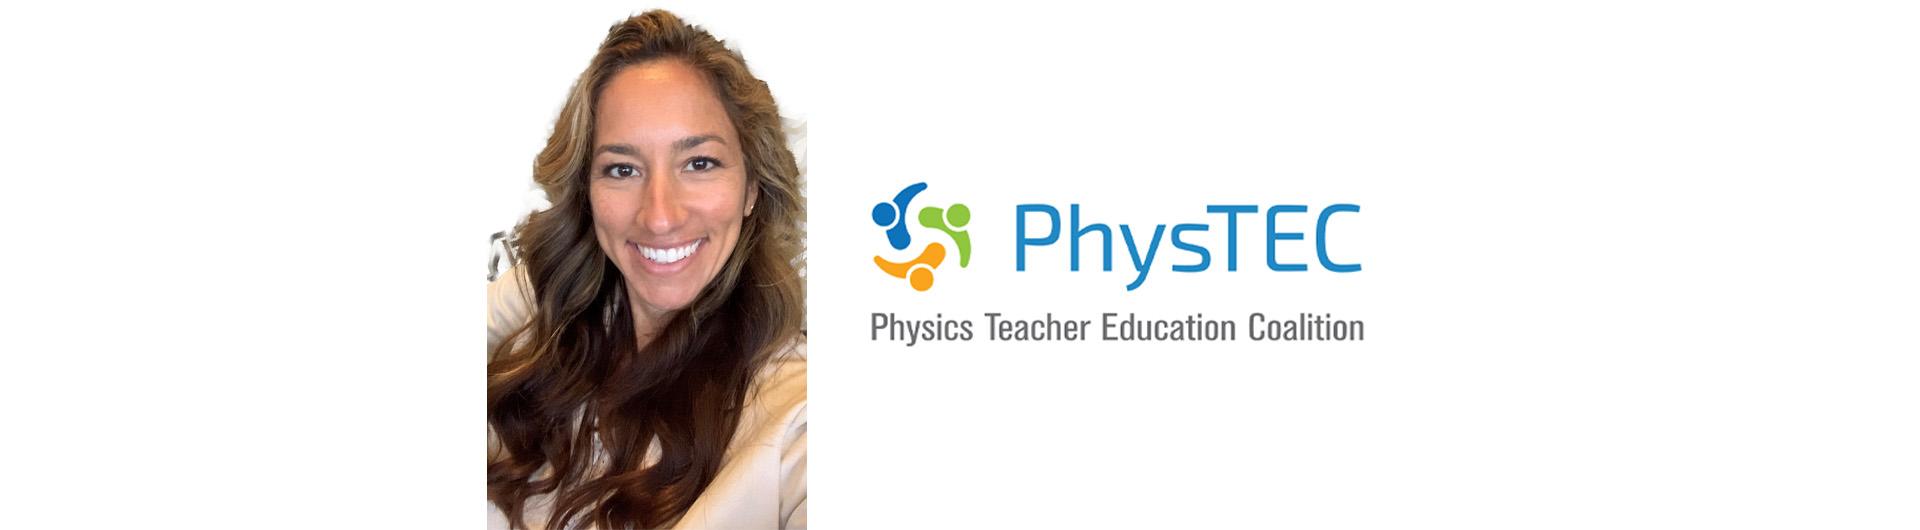 Tamara Araya and Physics Teacher Education Coalition